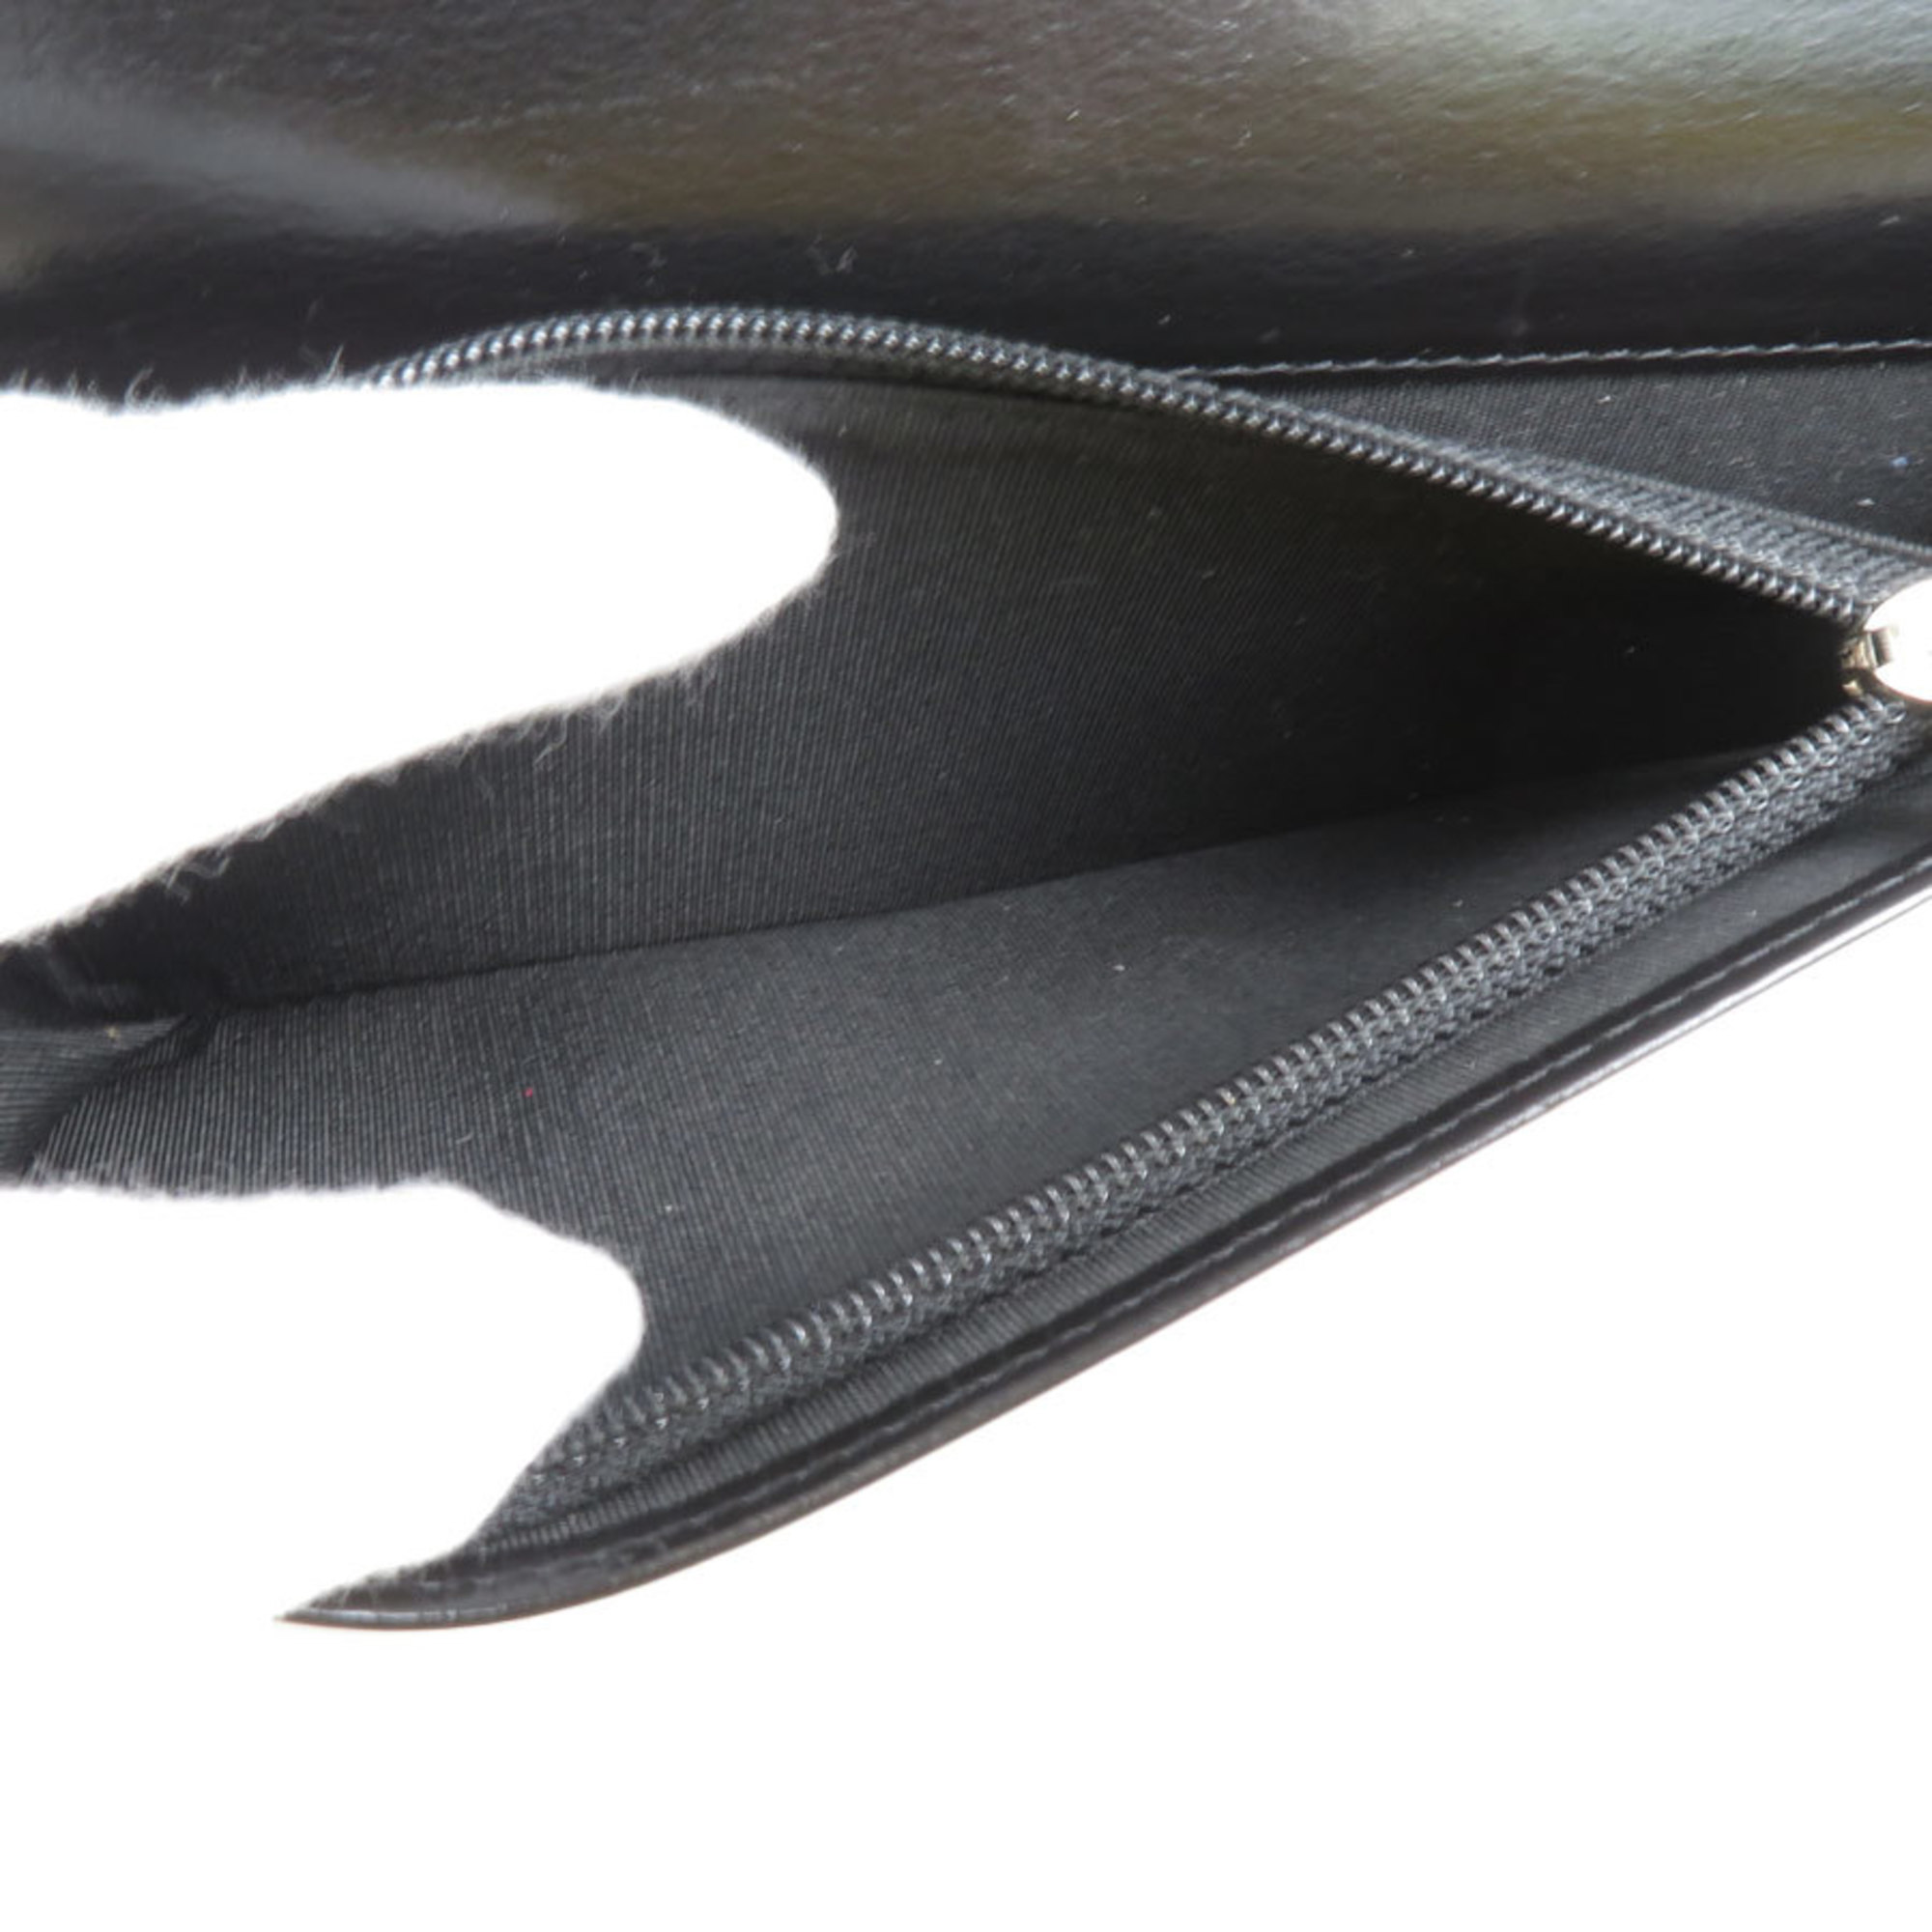 CHANEL Bifold Long Wallet VOTEZ COCO Leather Black Ladies